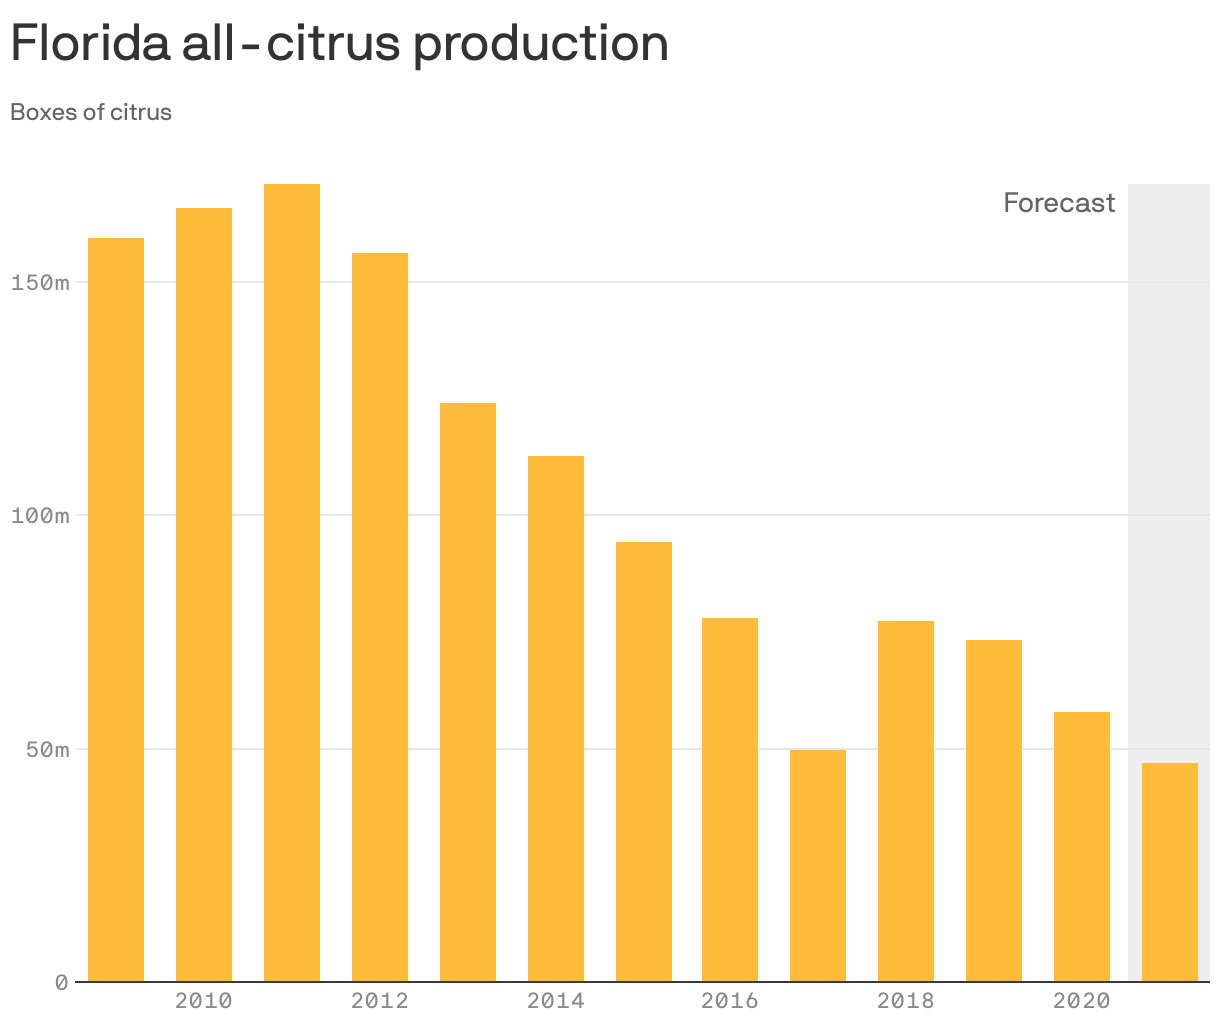 Florida all-citrus production